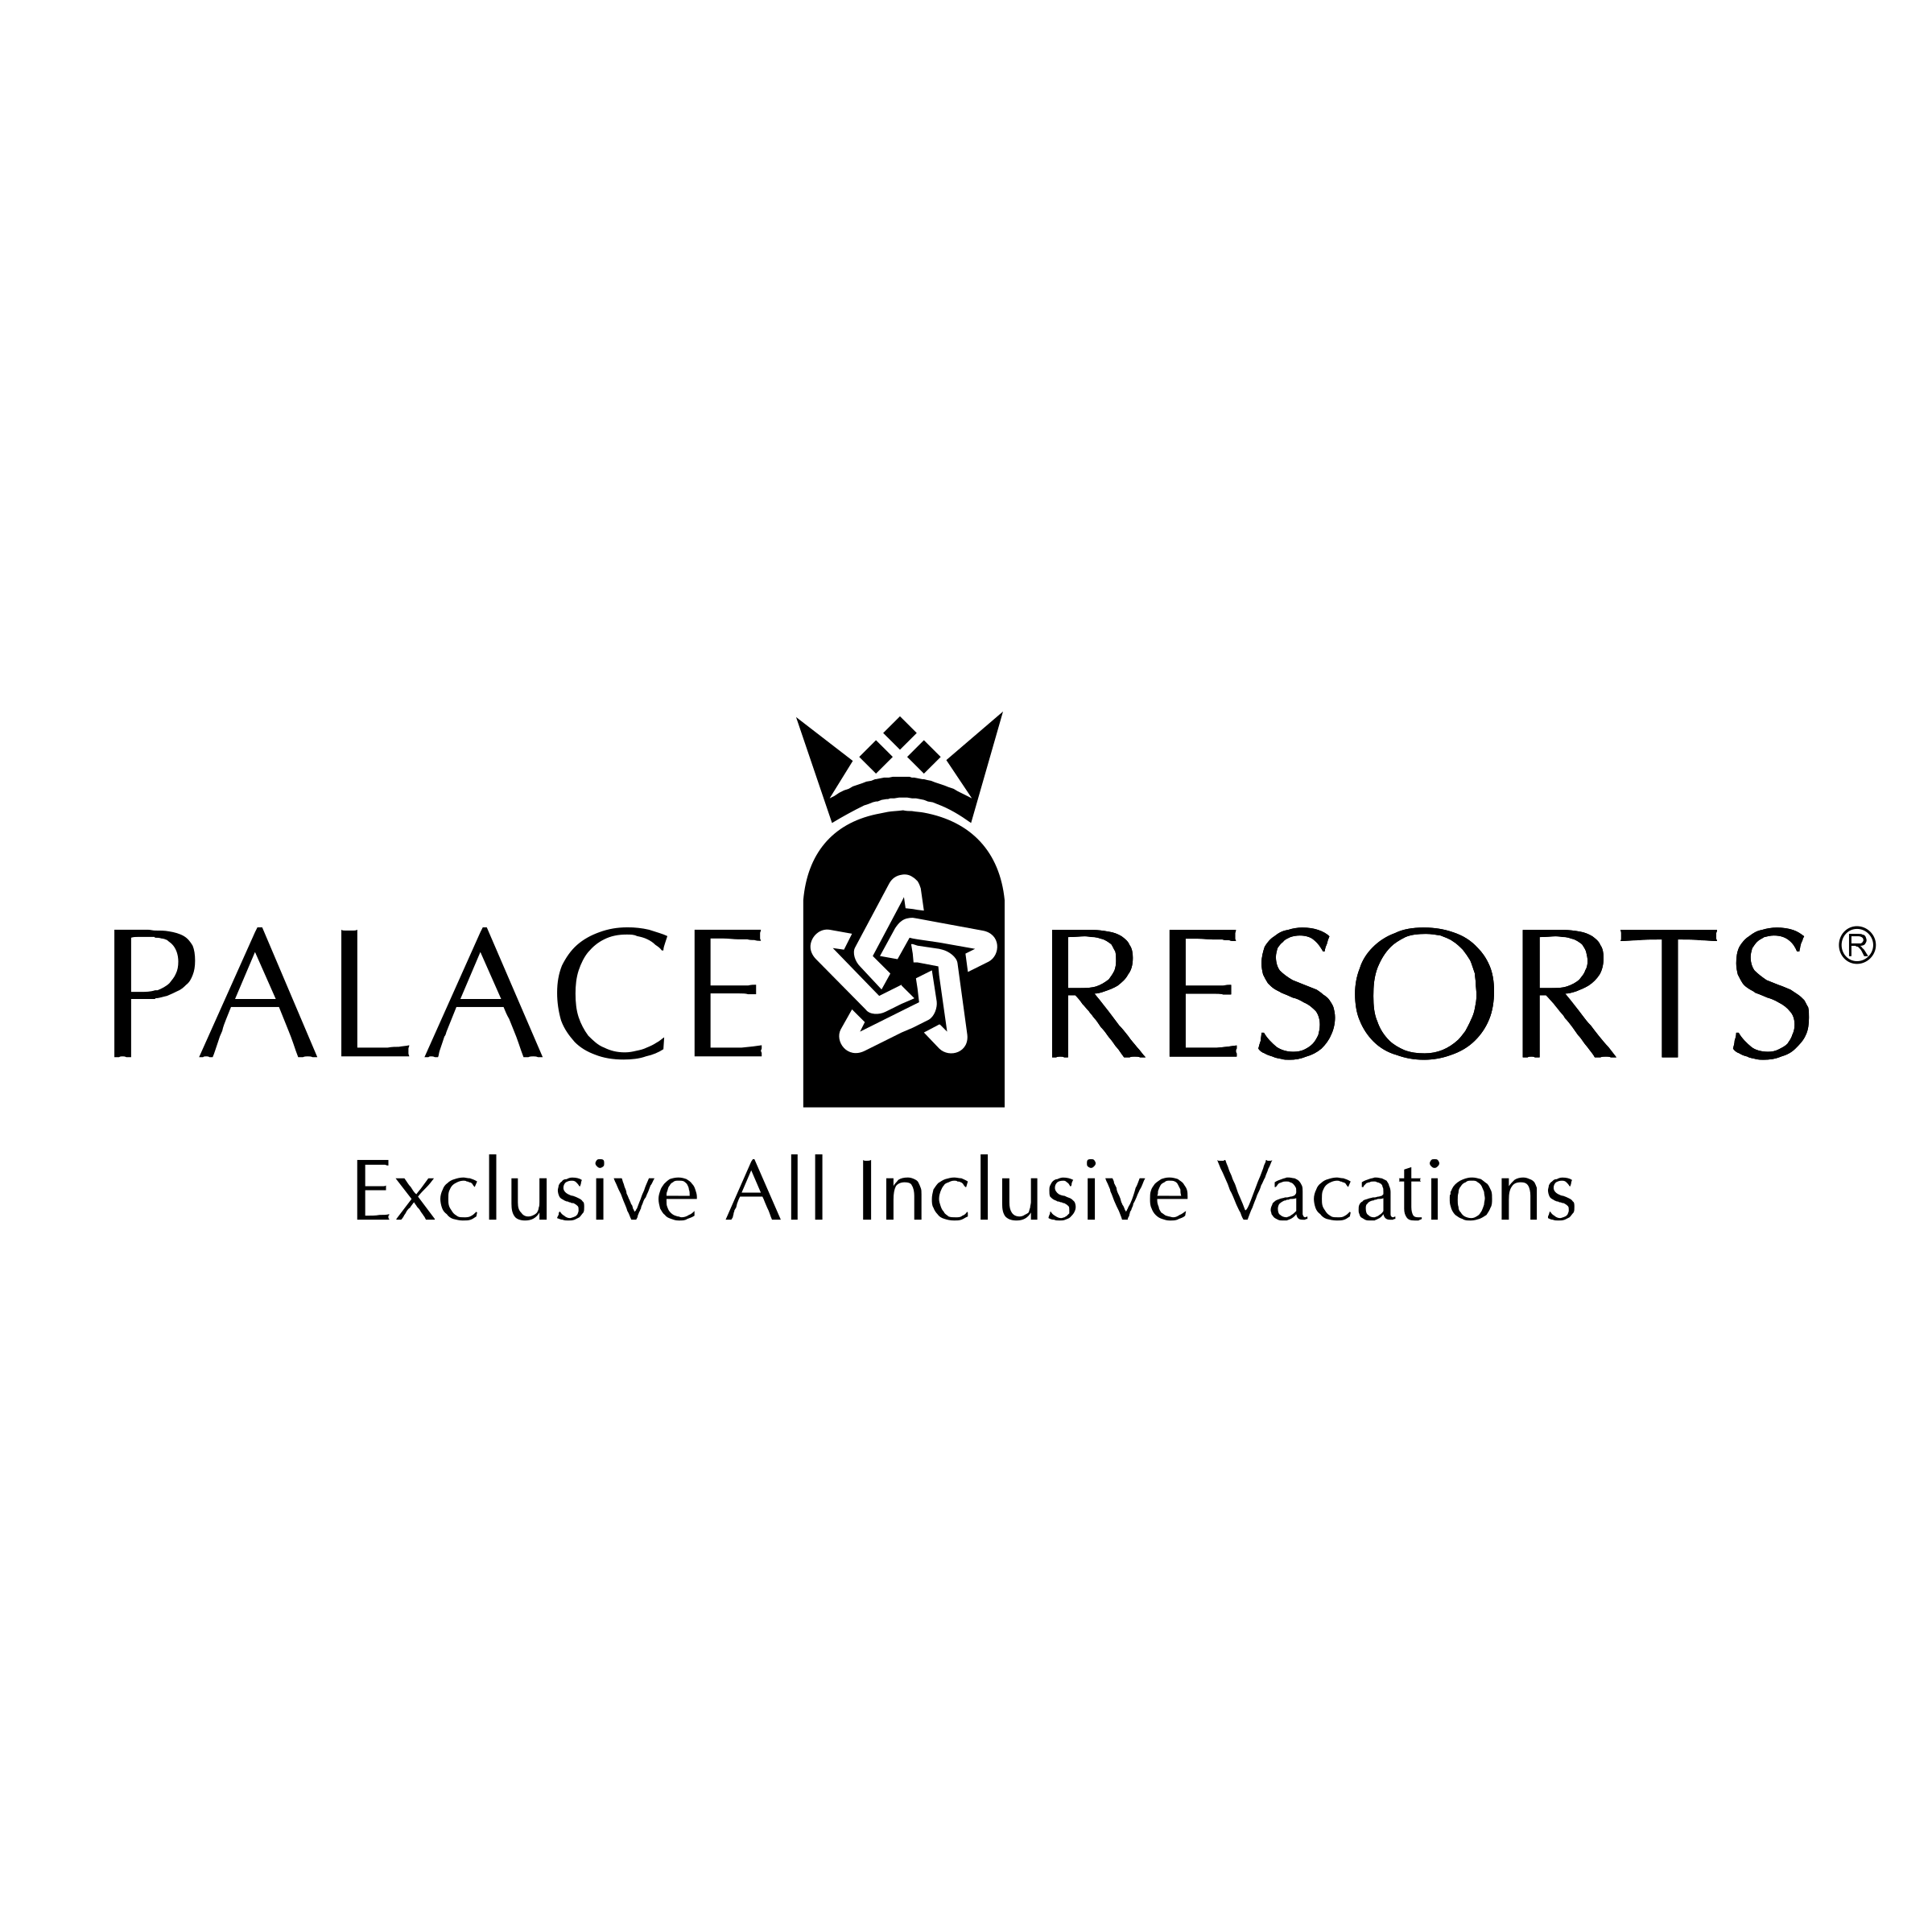 Palace Resorts Logo - Palace Resorts Logo PNG Transparent & SVG Vector - Freebie Supply